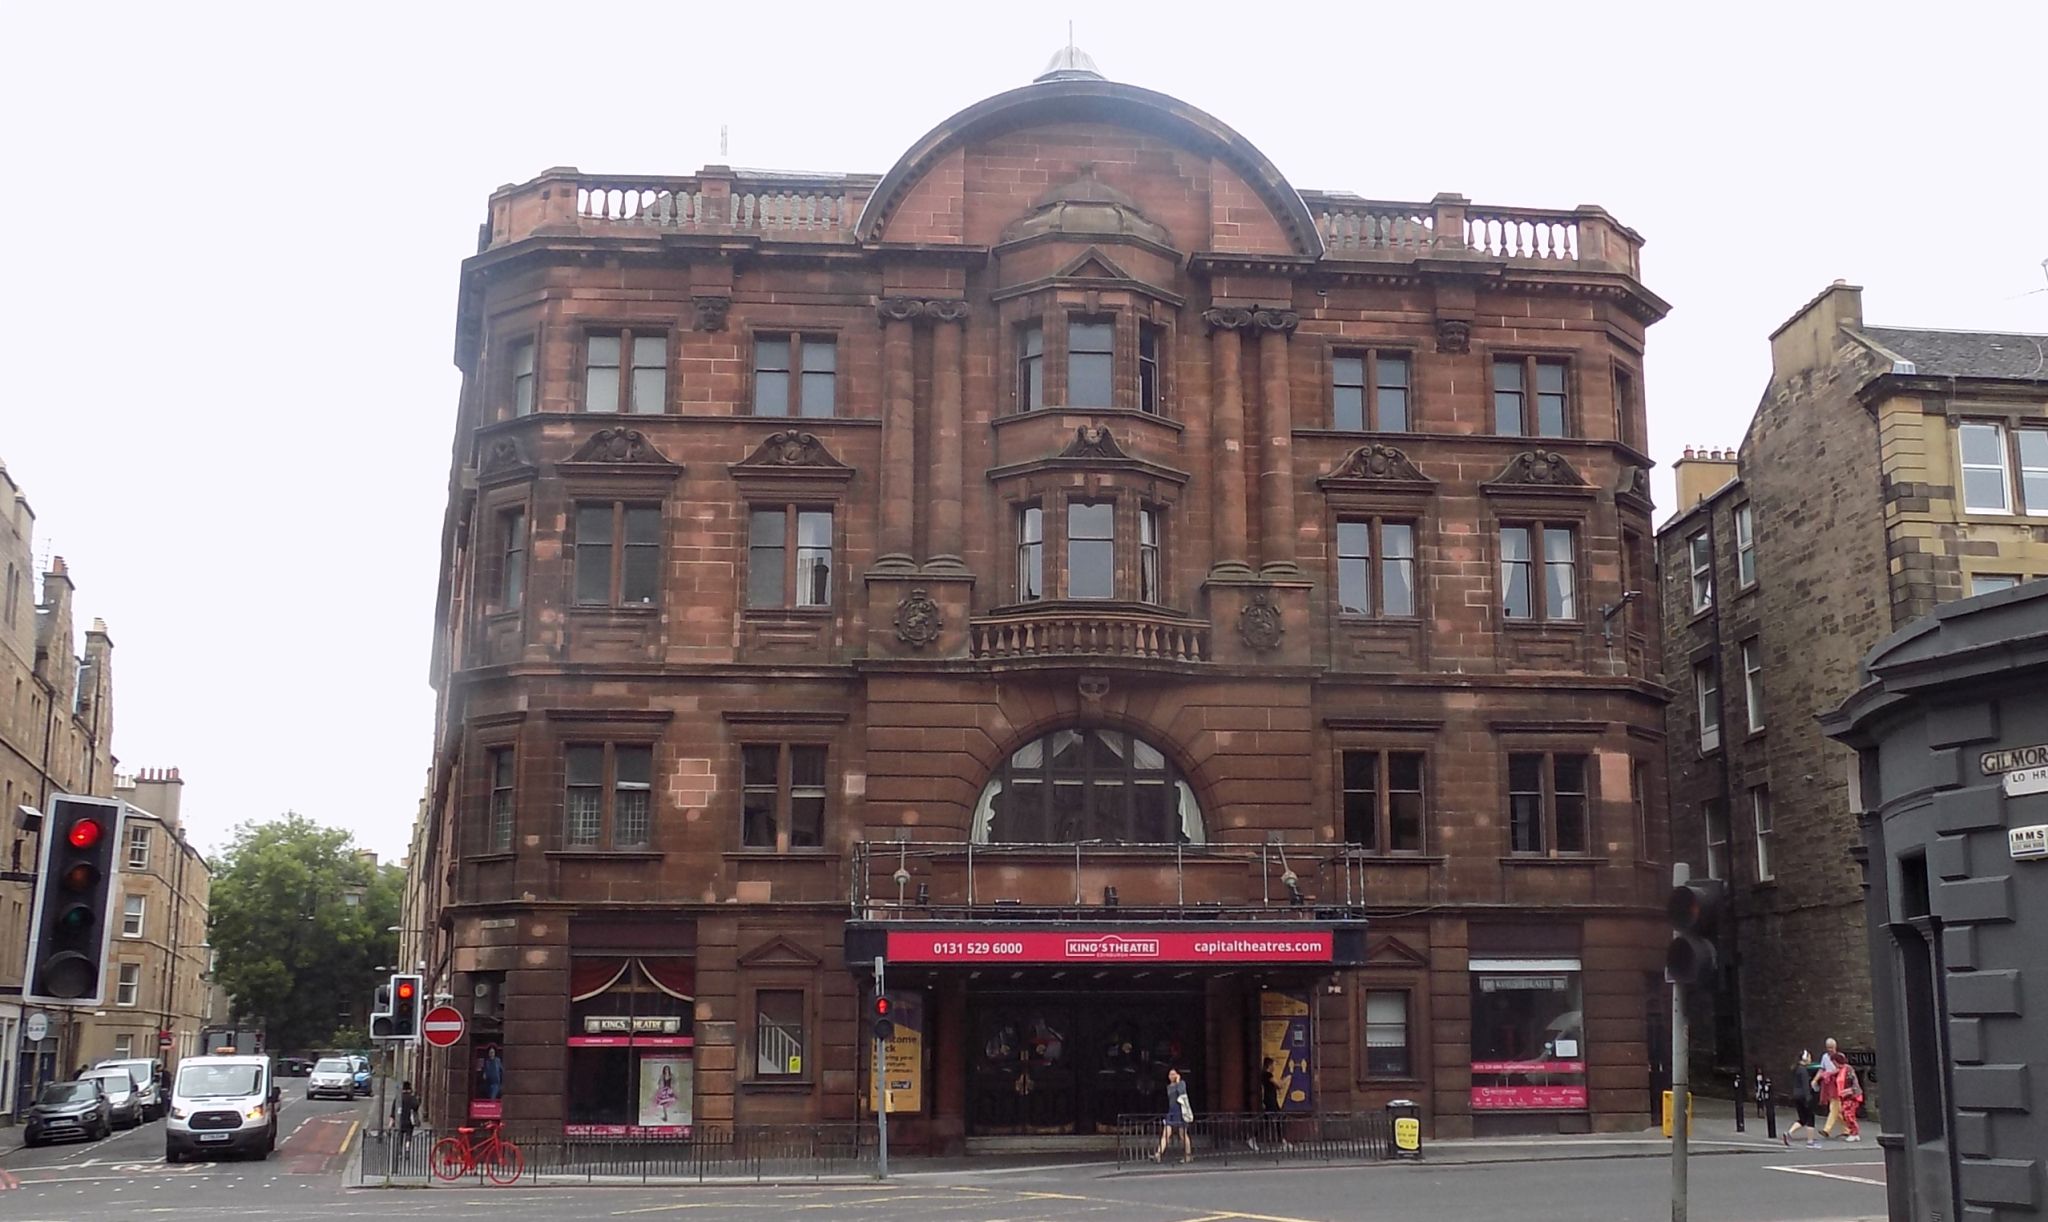 King's Theatre in Edinburgh